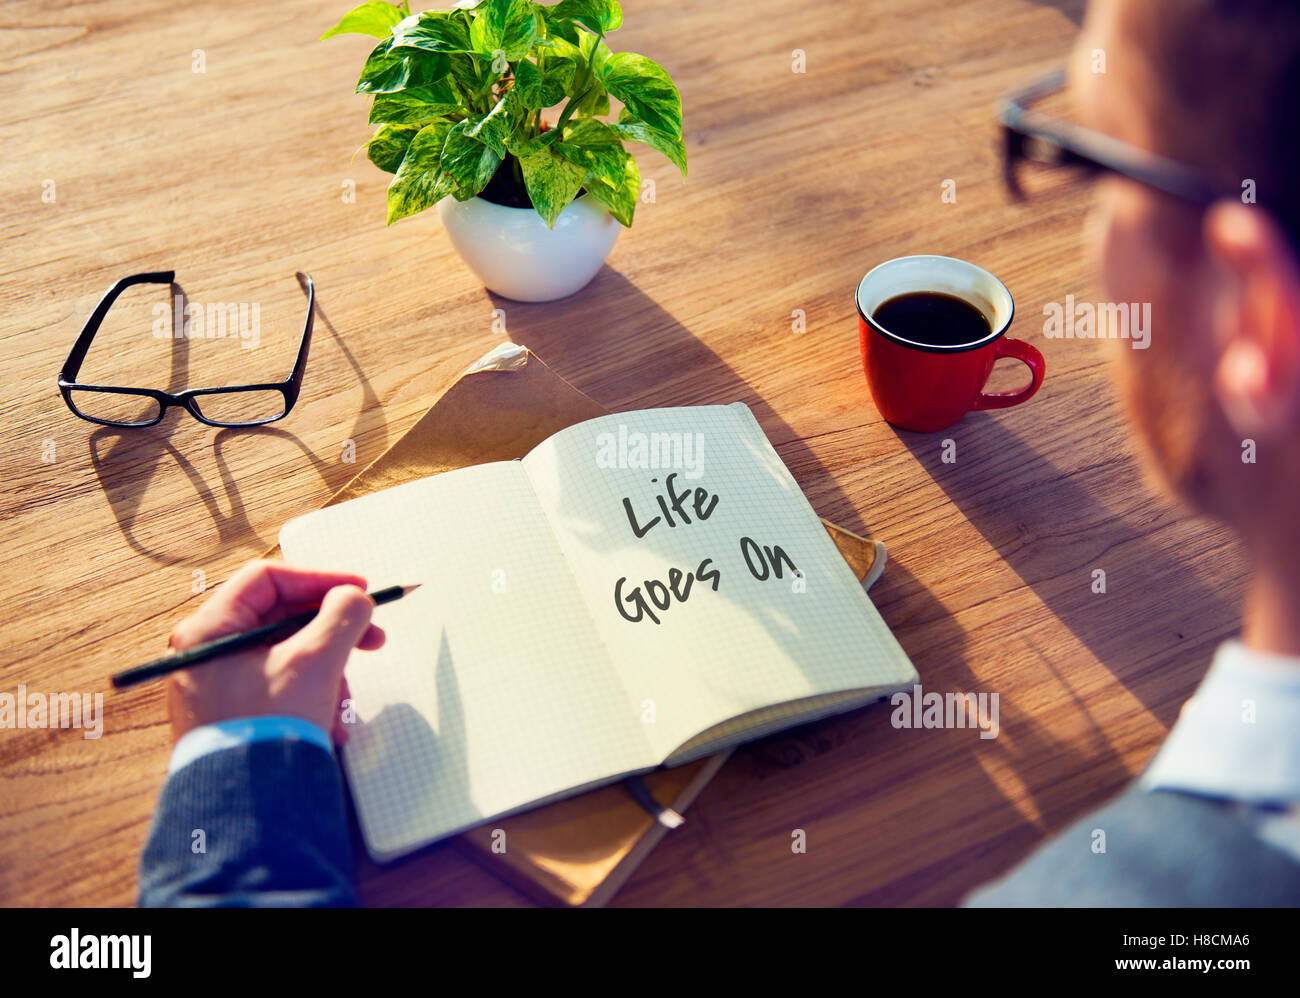 Life Goes Good Postive Concept Stock Photo